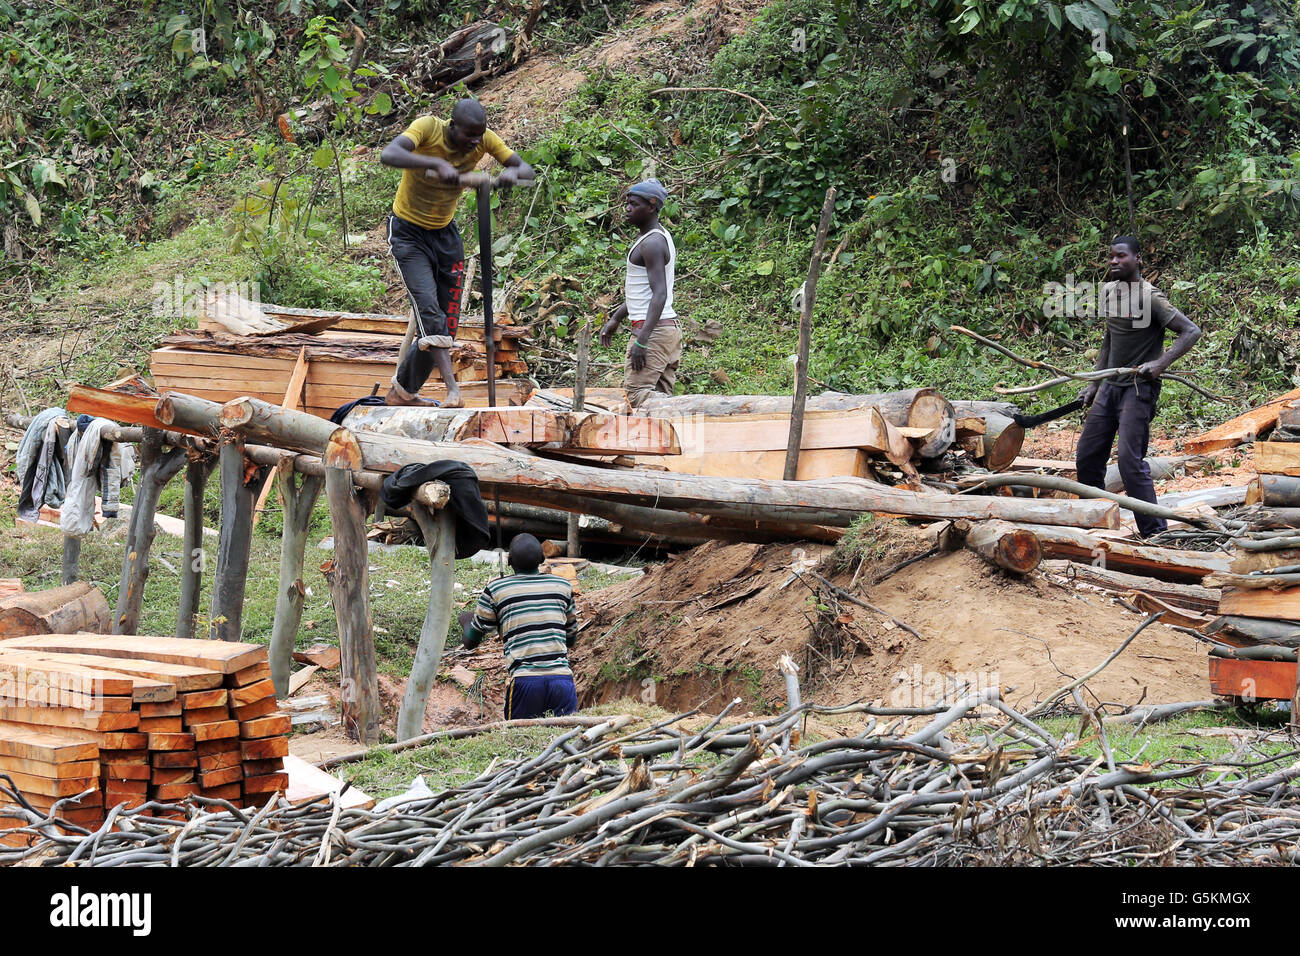 Manuelle Holz Sägen Mühle in einem Wald in Ruanda, Afrika Stockfoto